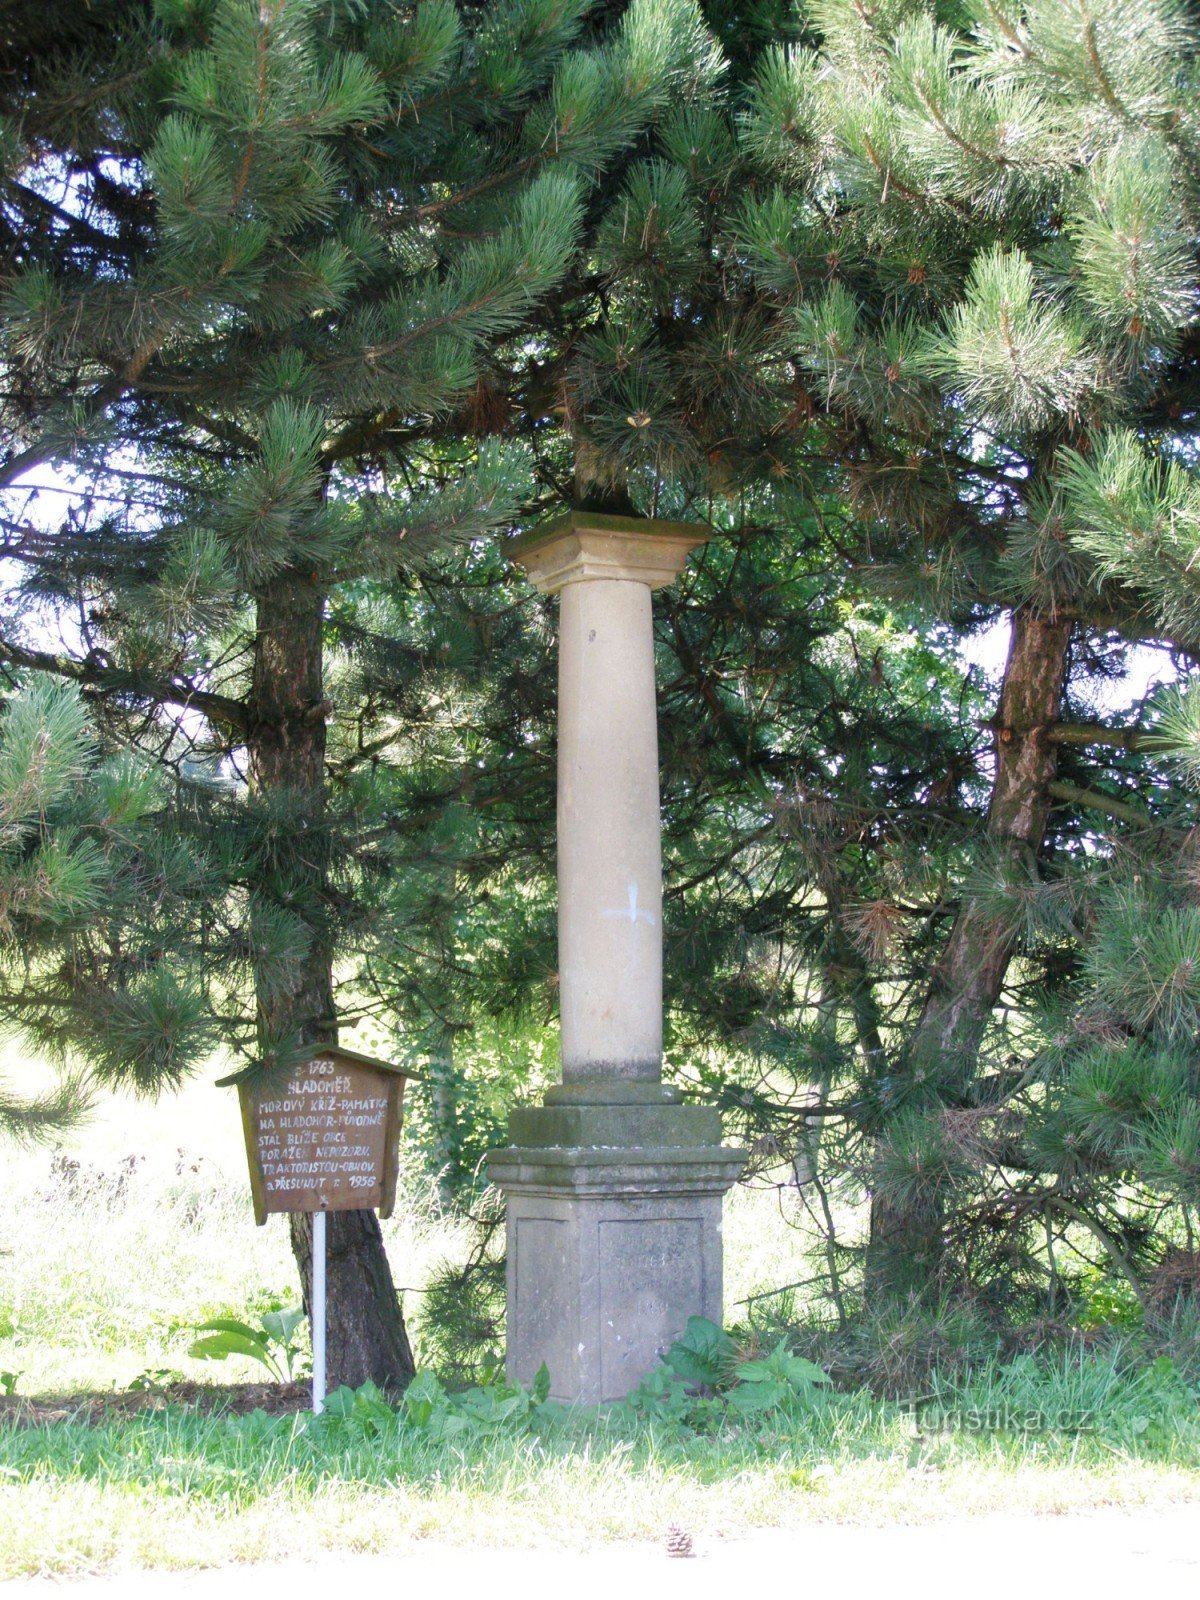 Hungometer in Šárovcova Lhota